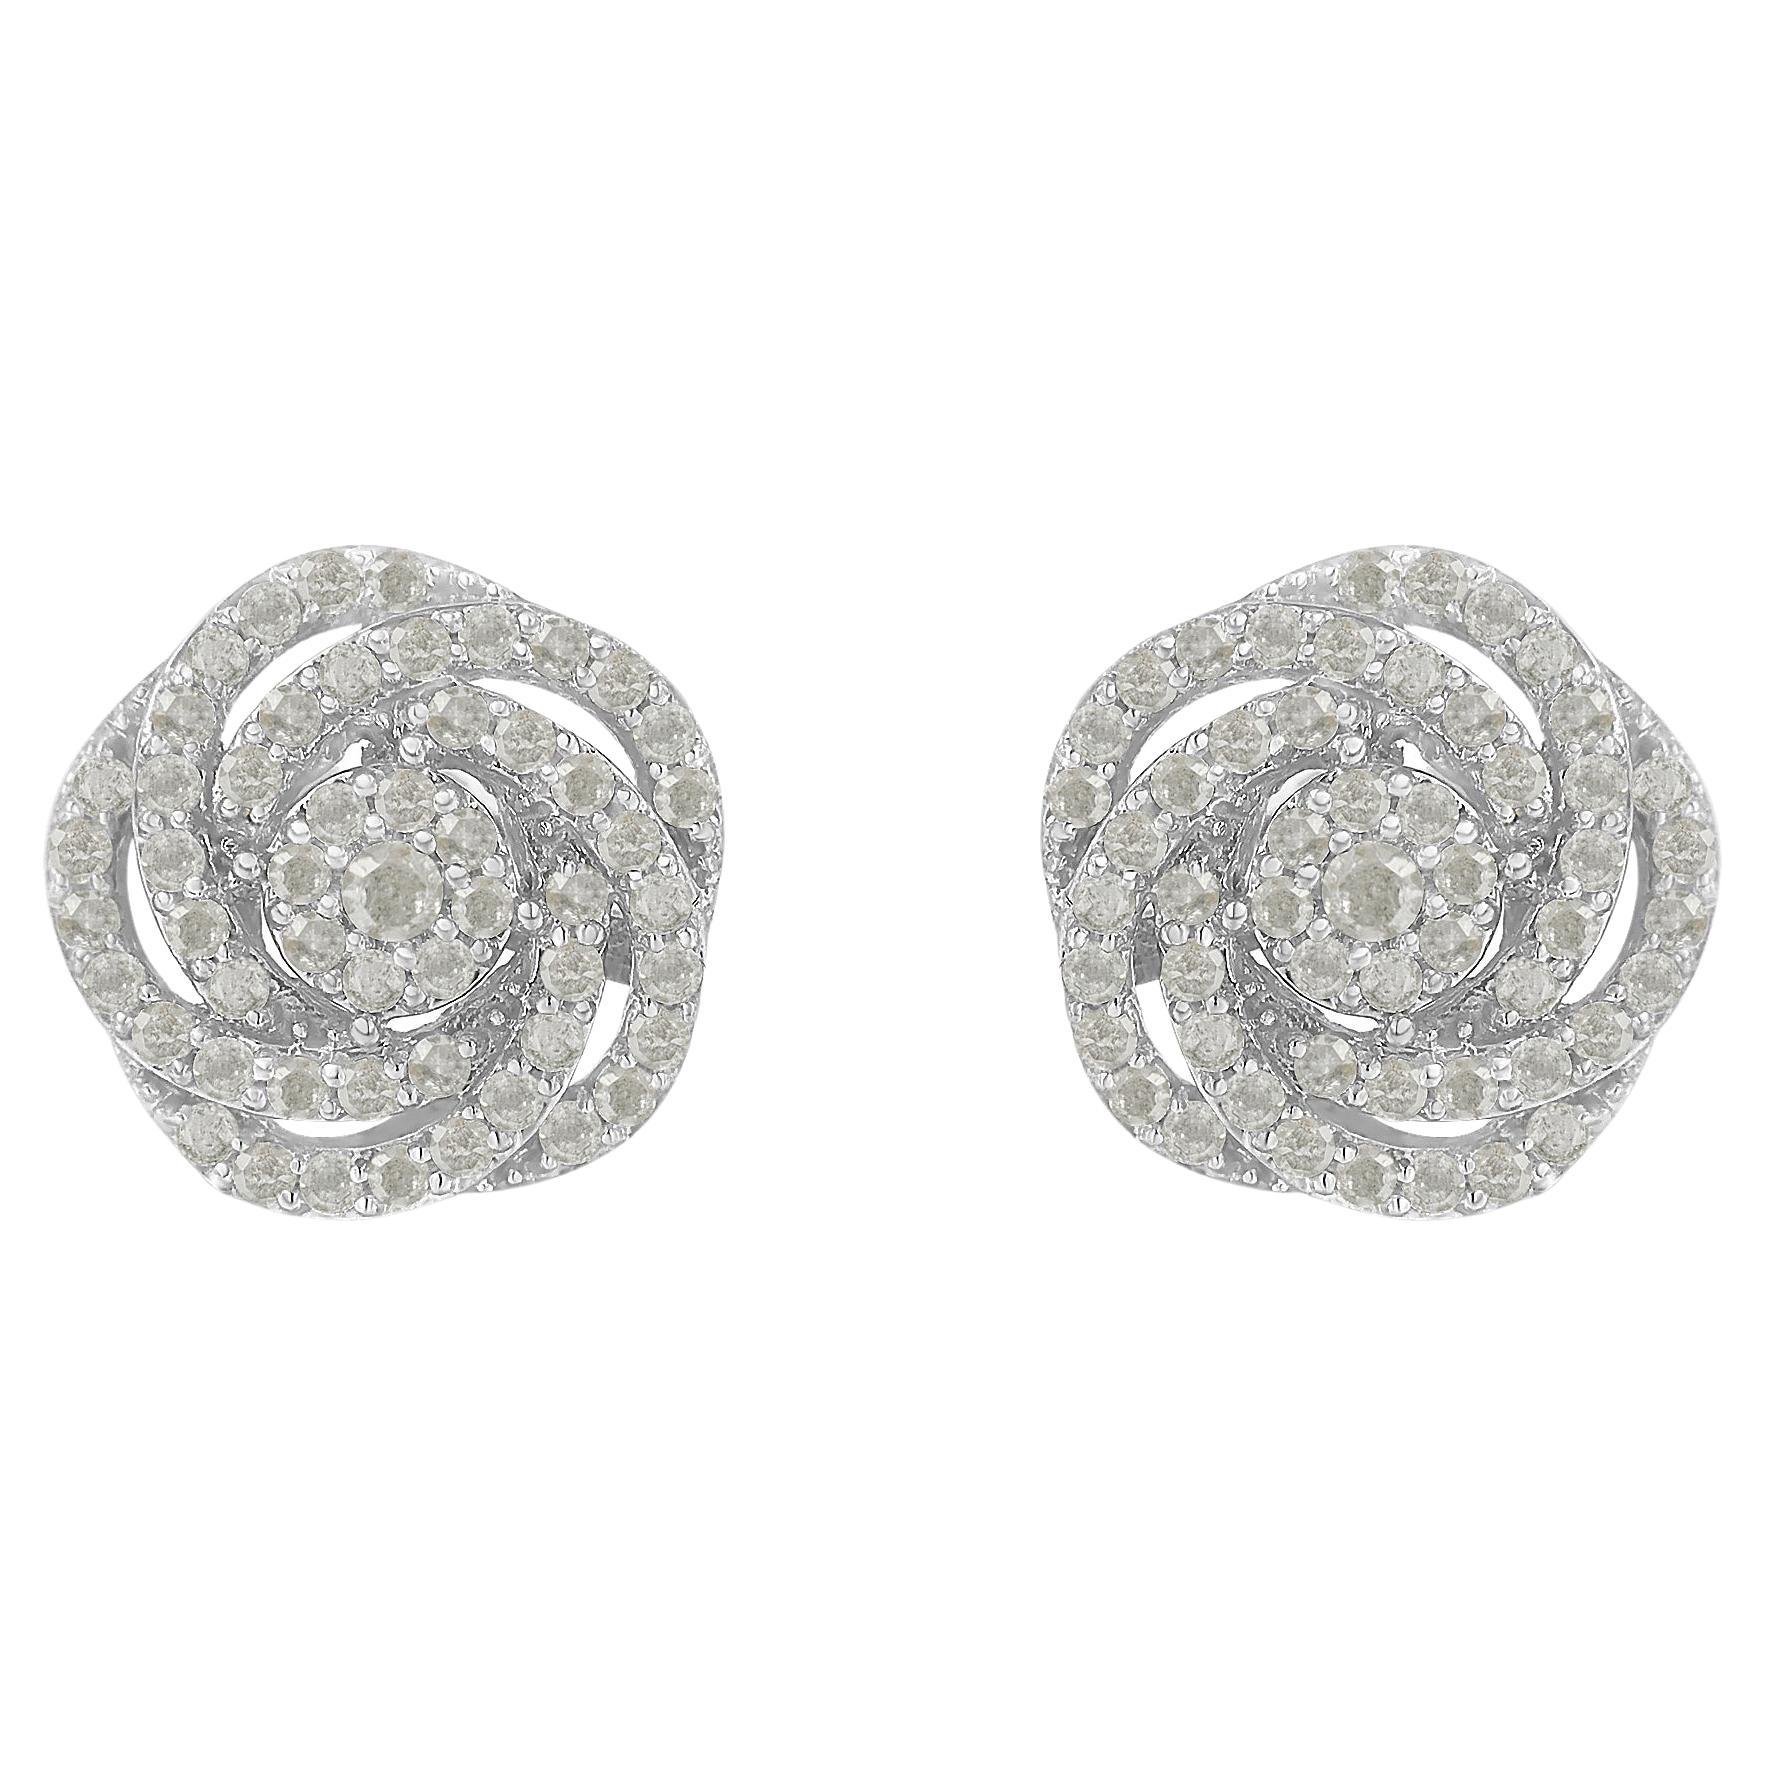 10K White Gold 1.0 Carat Rose-Cut Diamond Floral Cluster Earrings